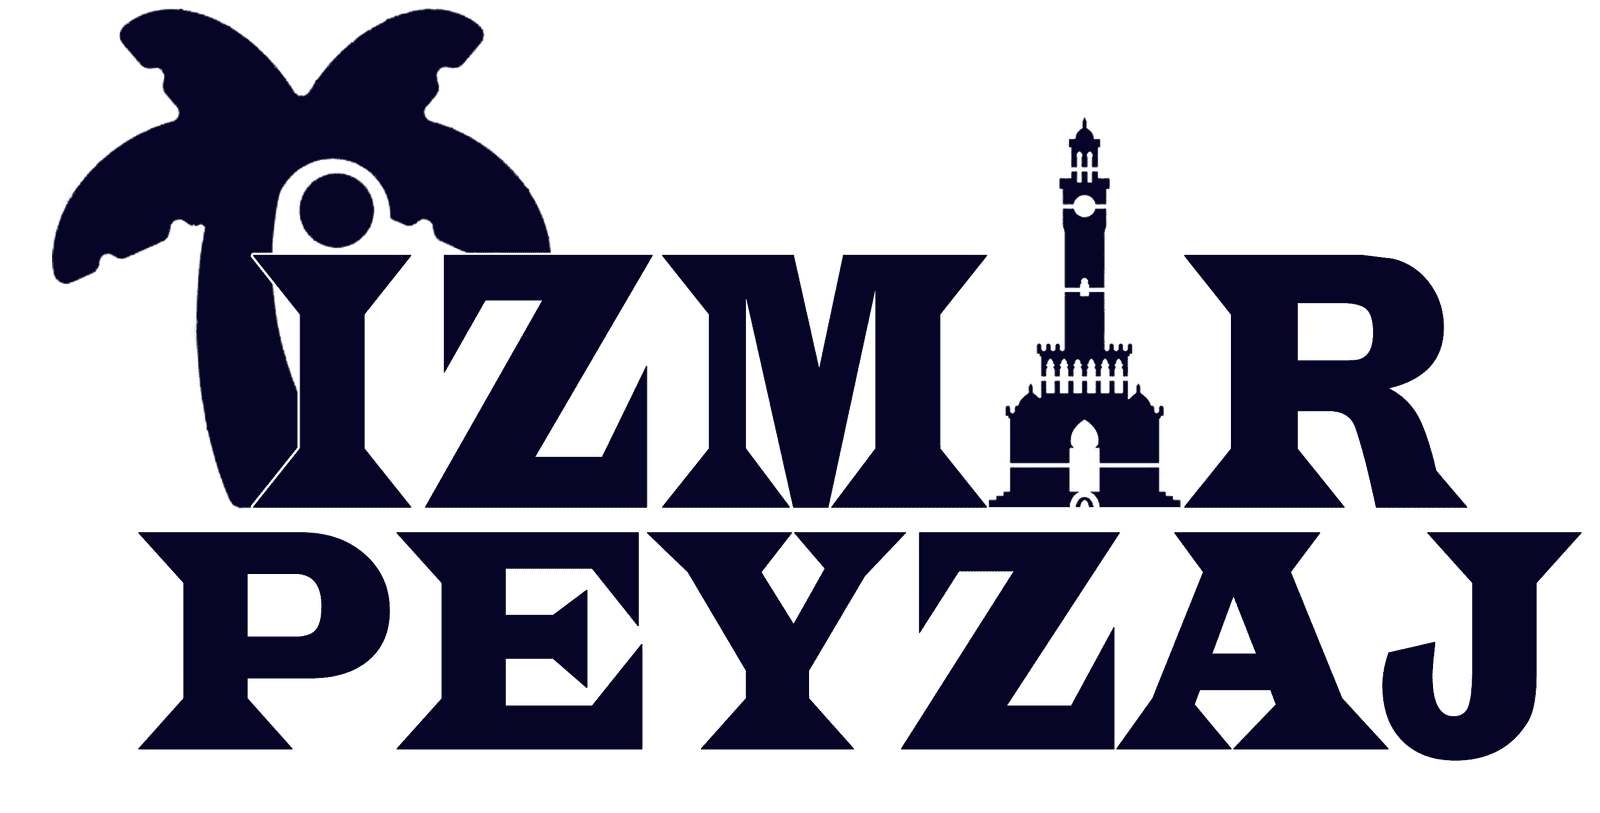 İzmir Peyzaj ®